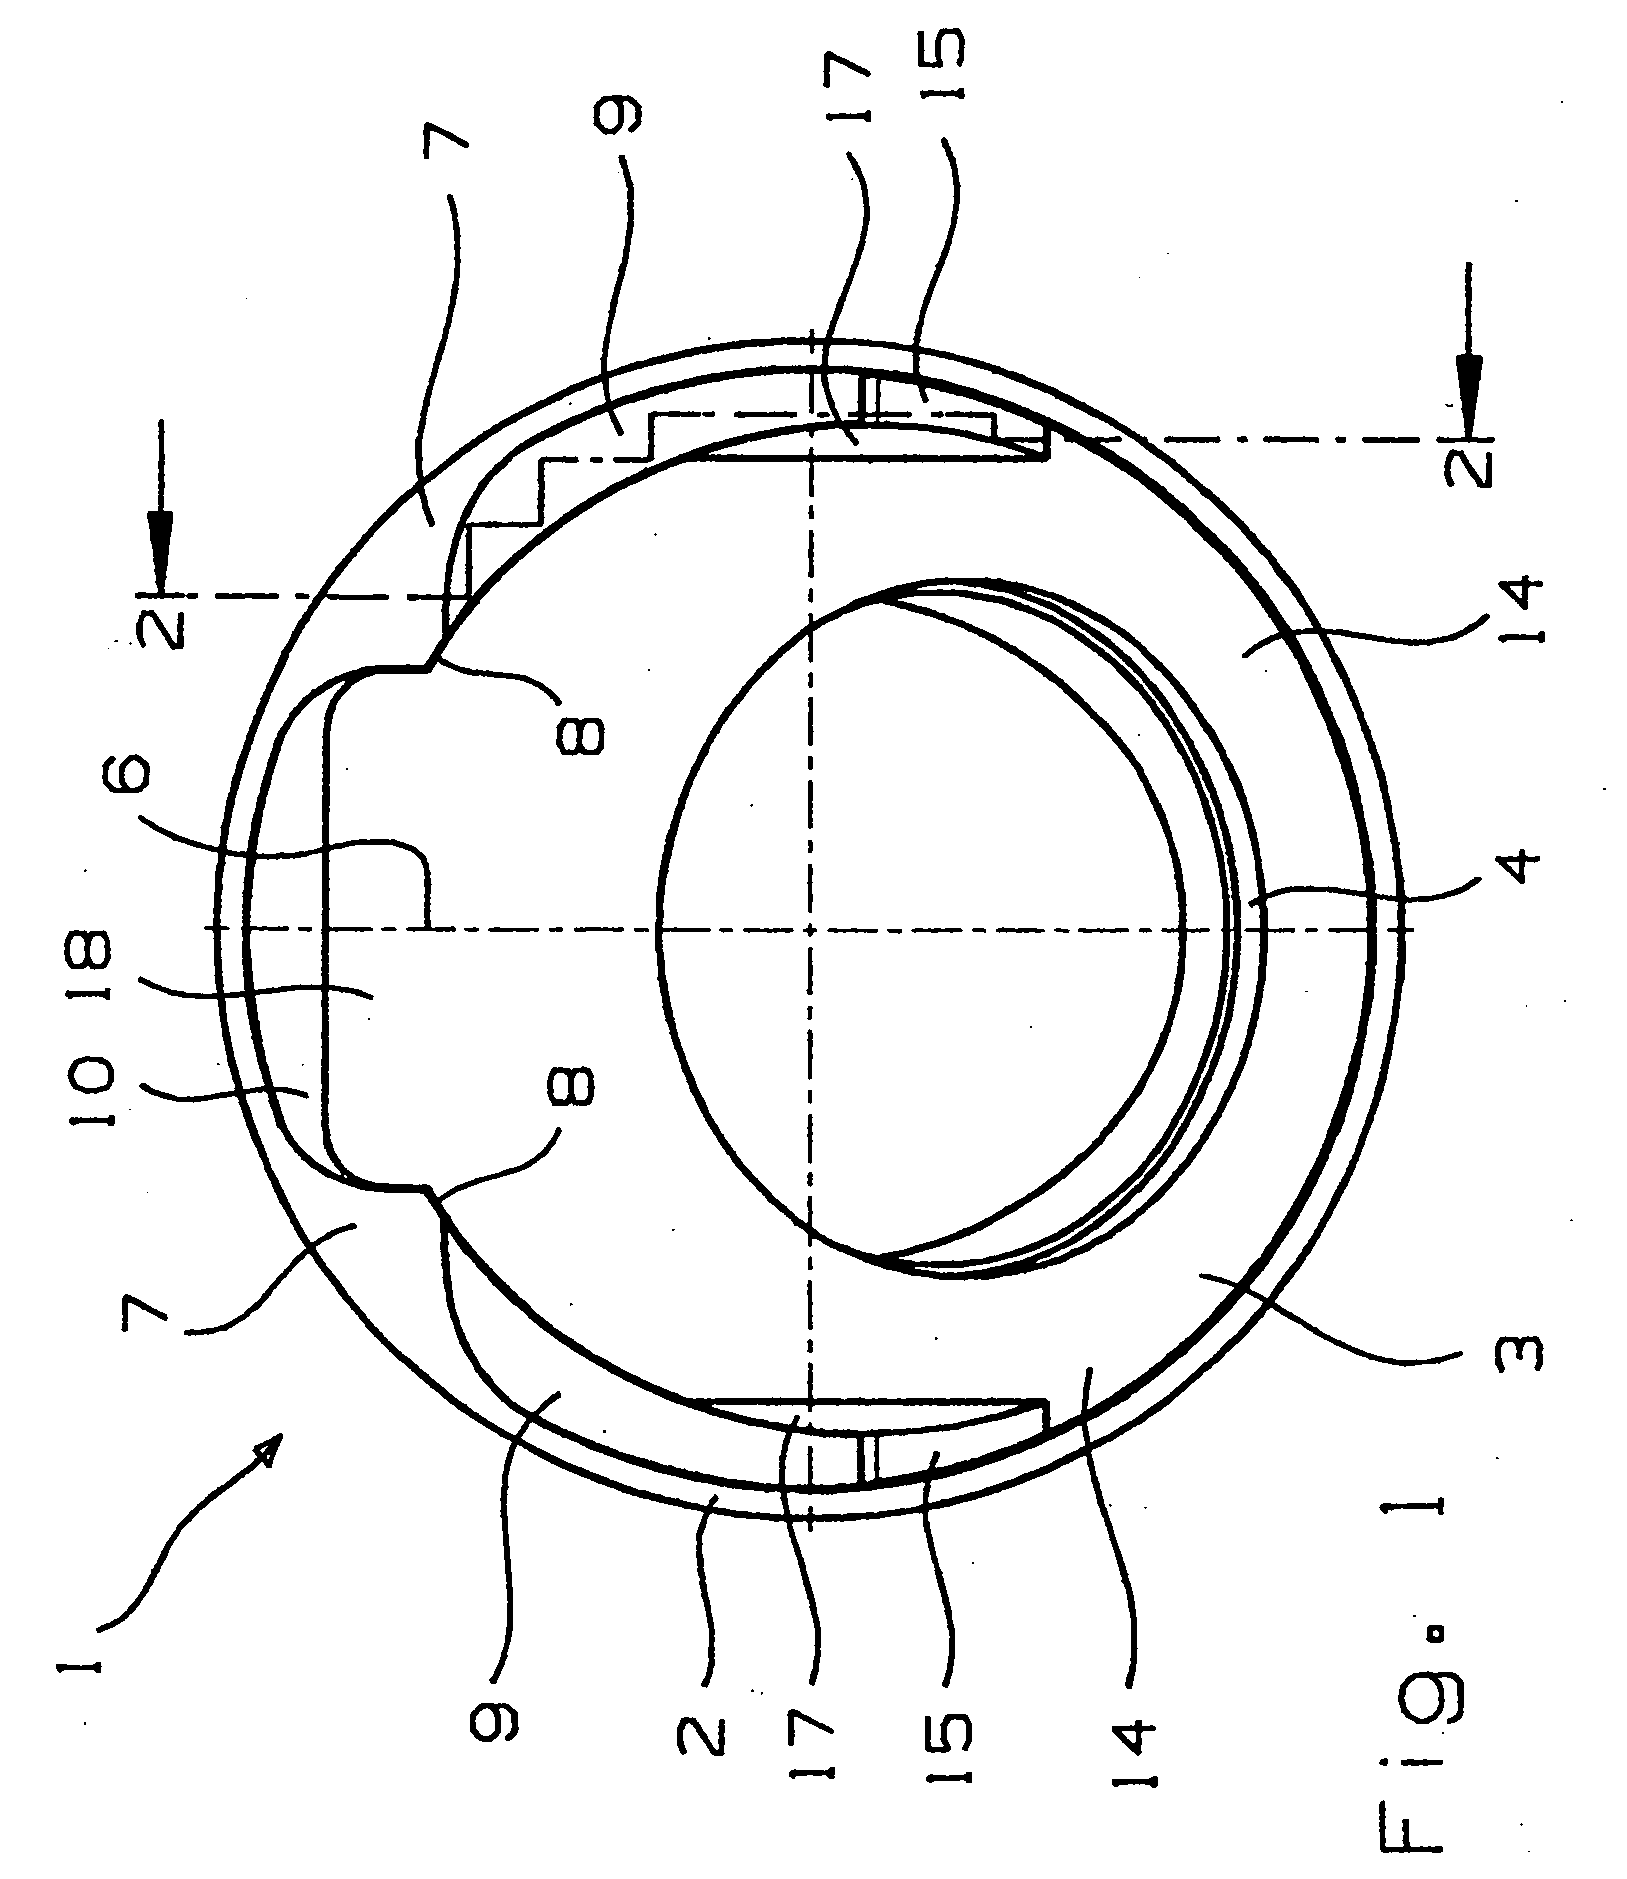 Endoscope optics with a lateral optic-fiber bundle